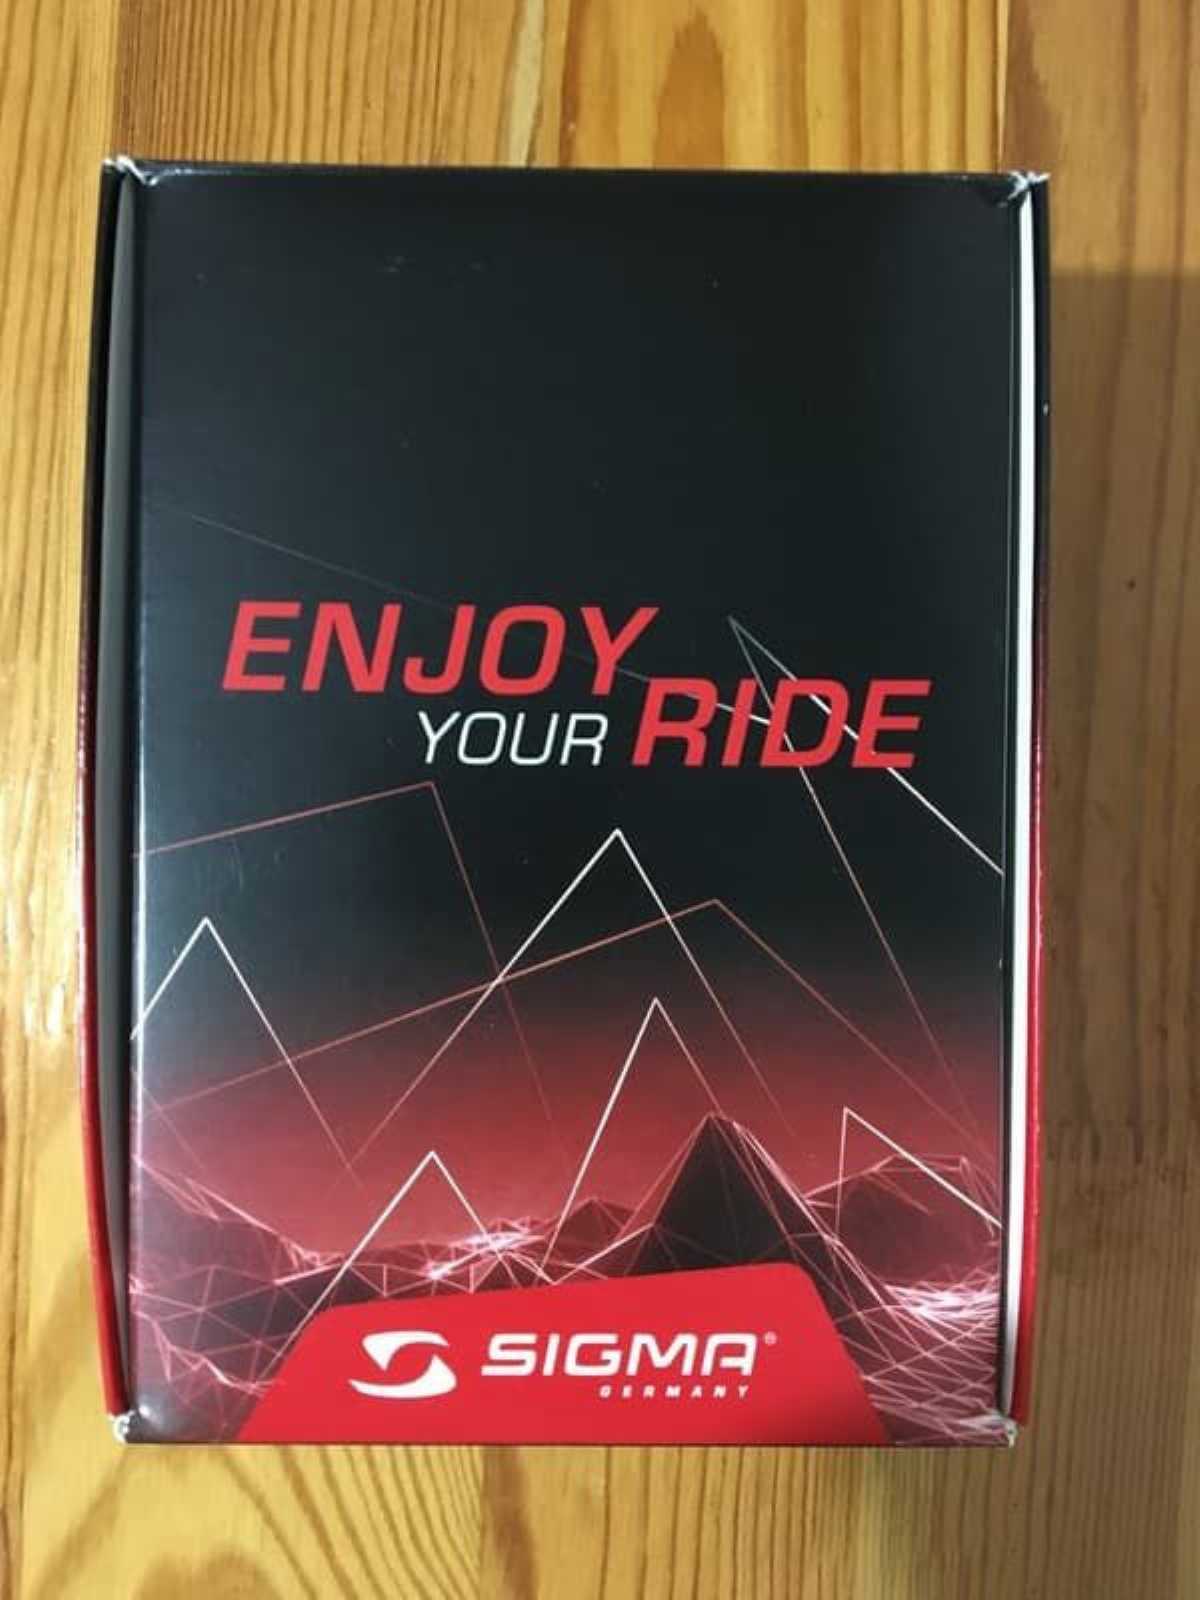 Sigma GPS Rox 11